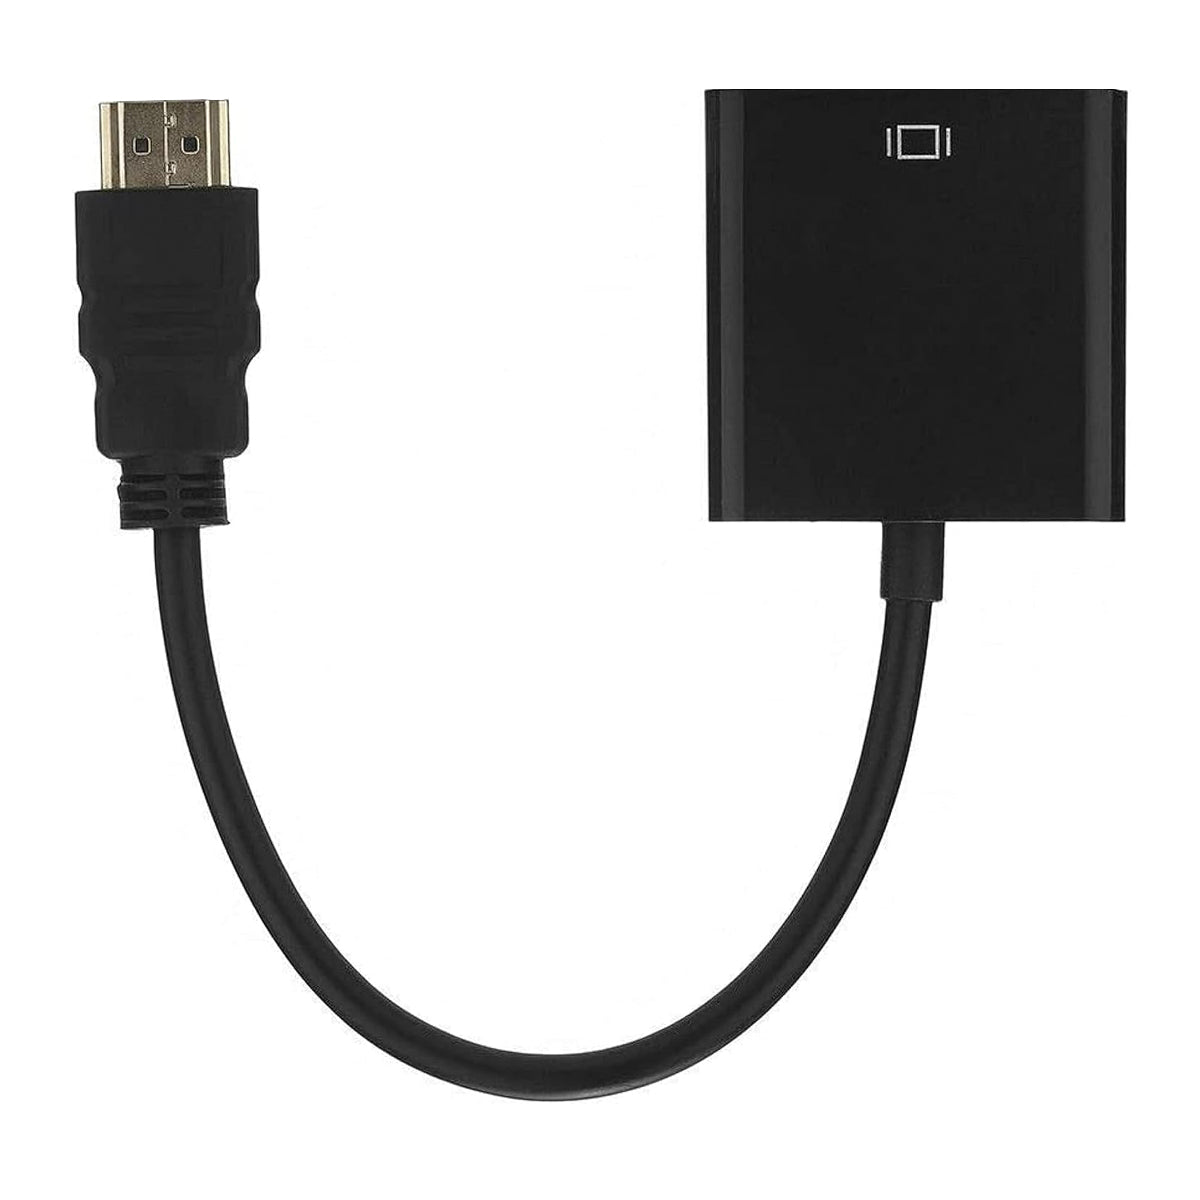 HDMI-zu-VGA-Adapter, HDMI-zu-VGA-Konverter für Desktop-PC, Laptop, Ultrabook